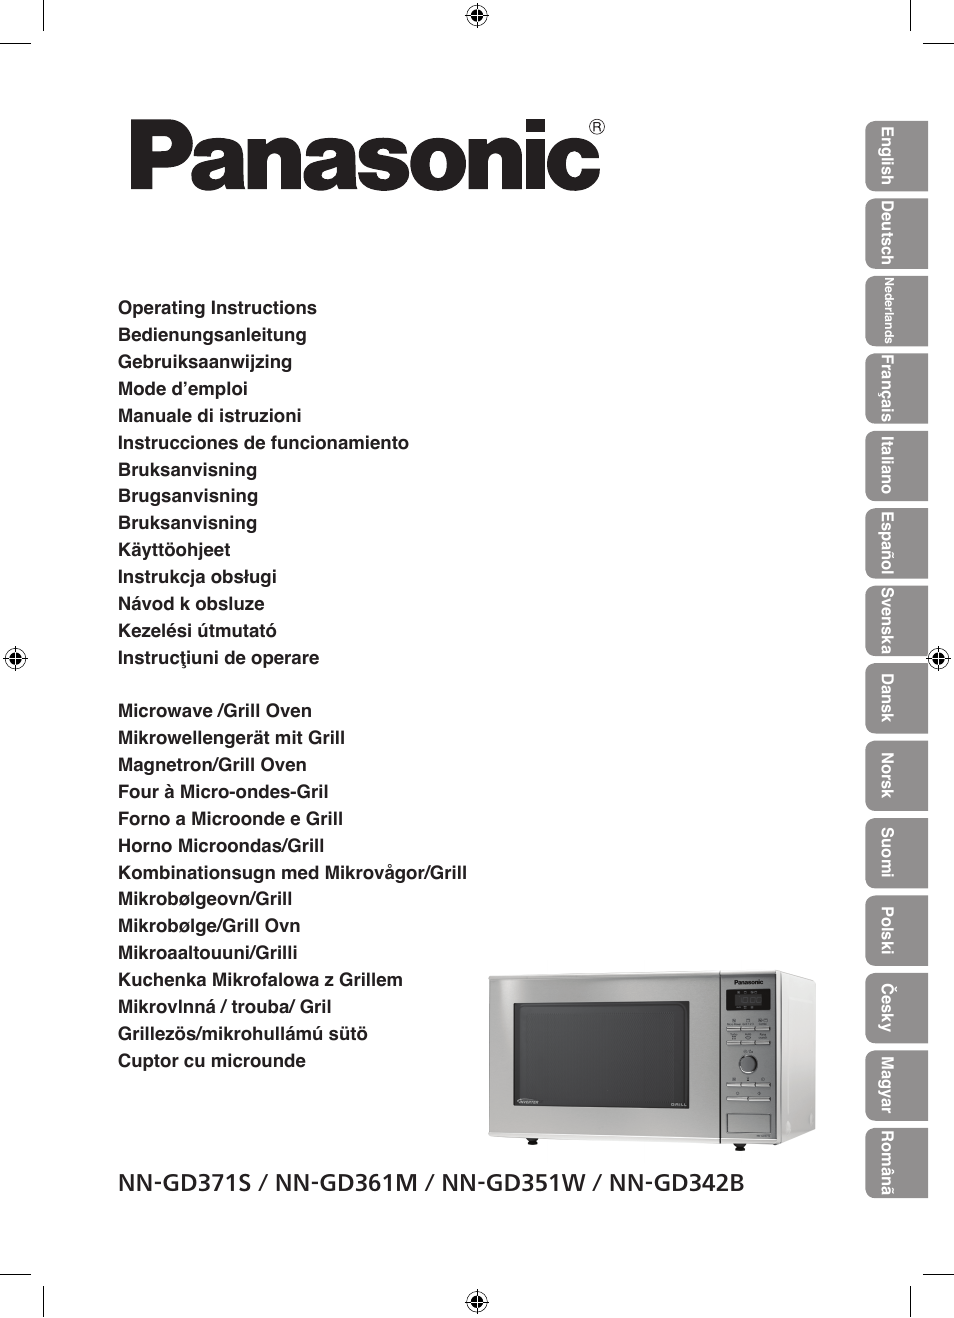 Panasonic NNGD361M Manuale d'uso | Pagine: 38